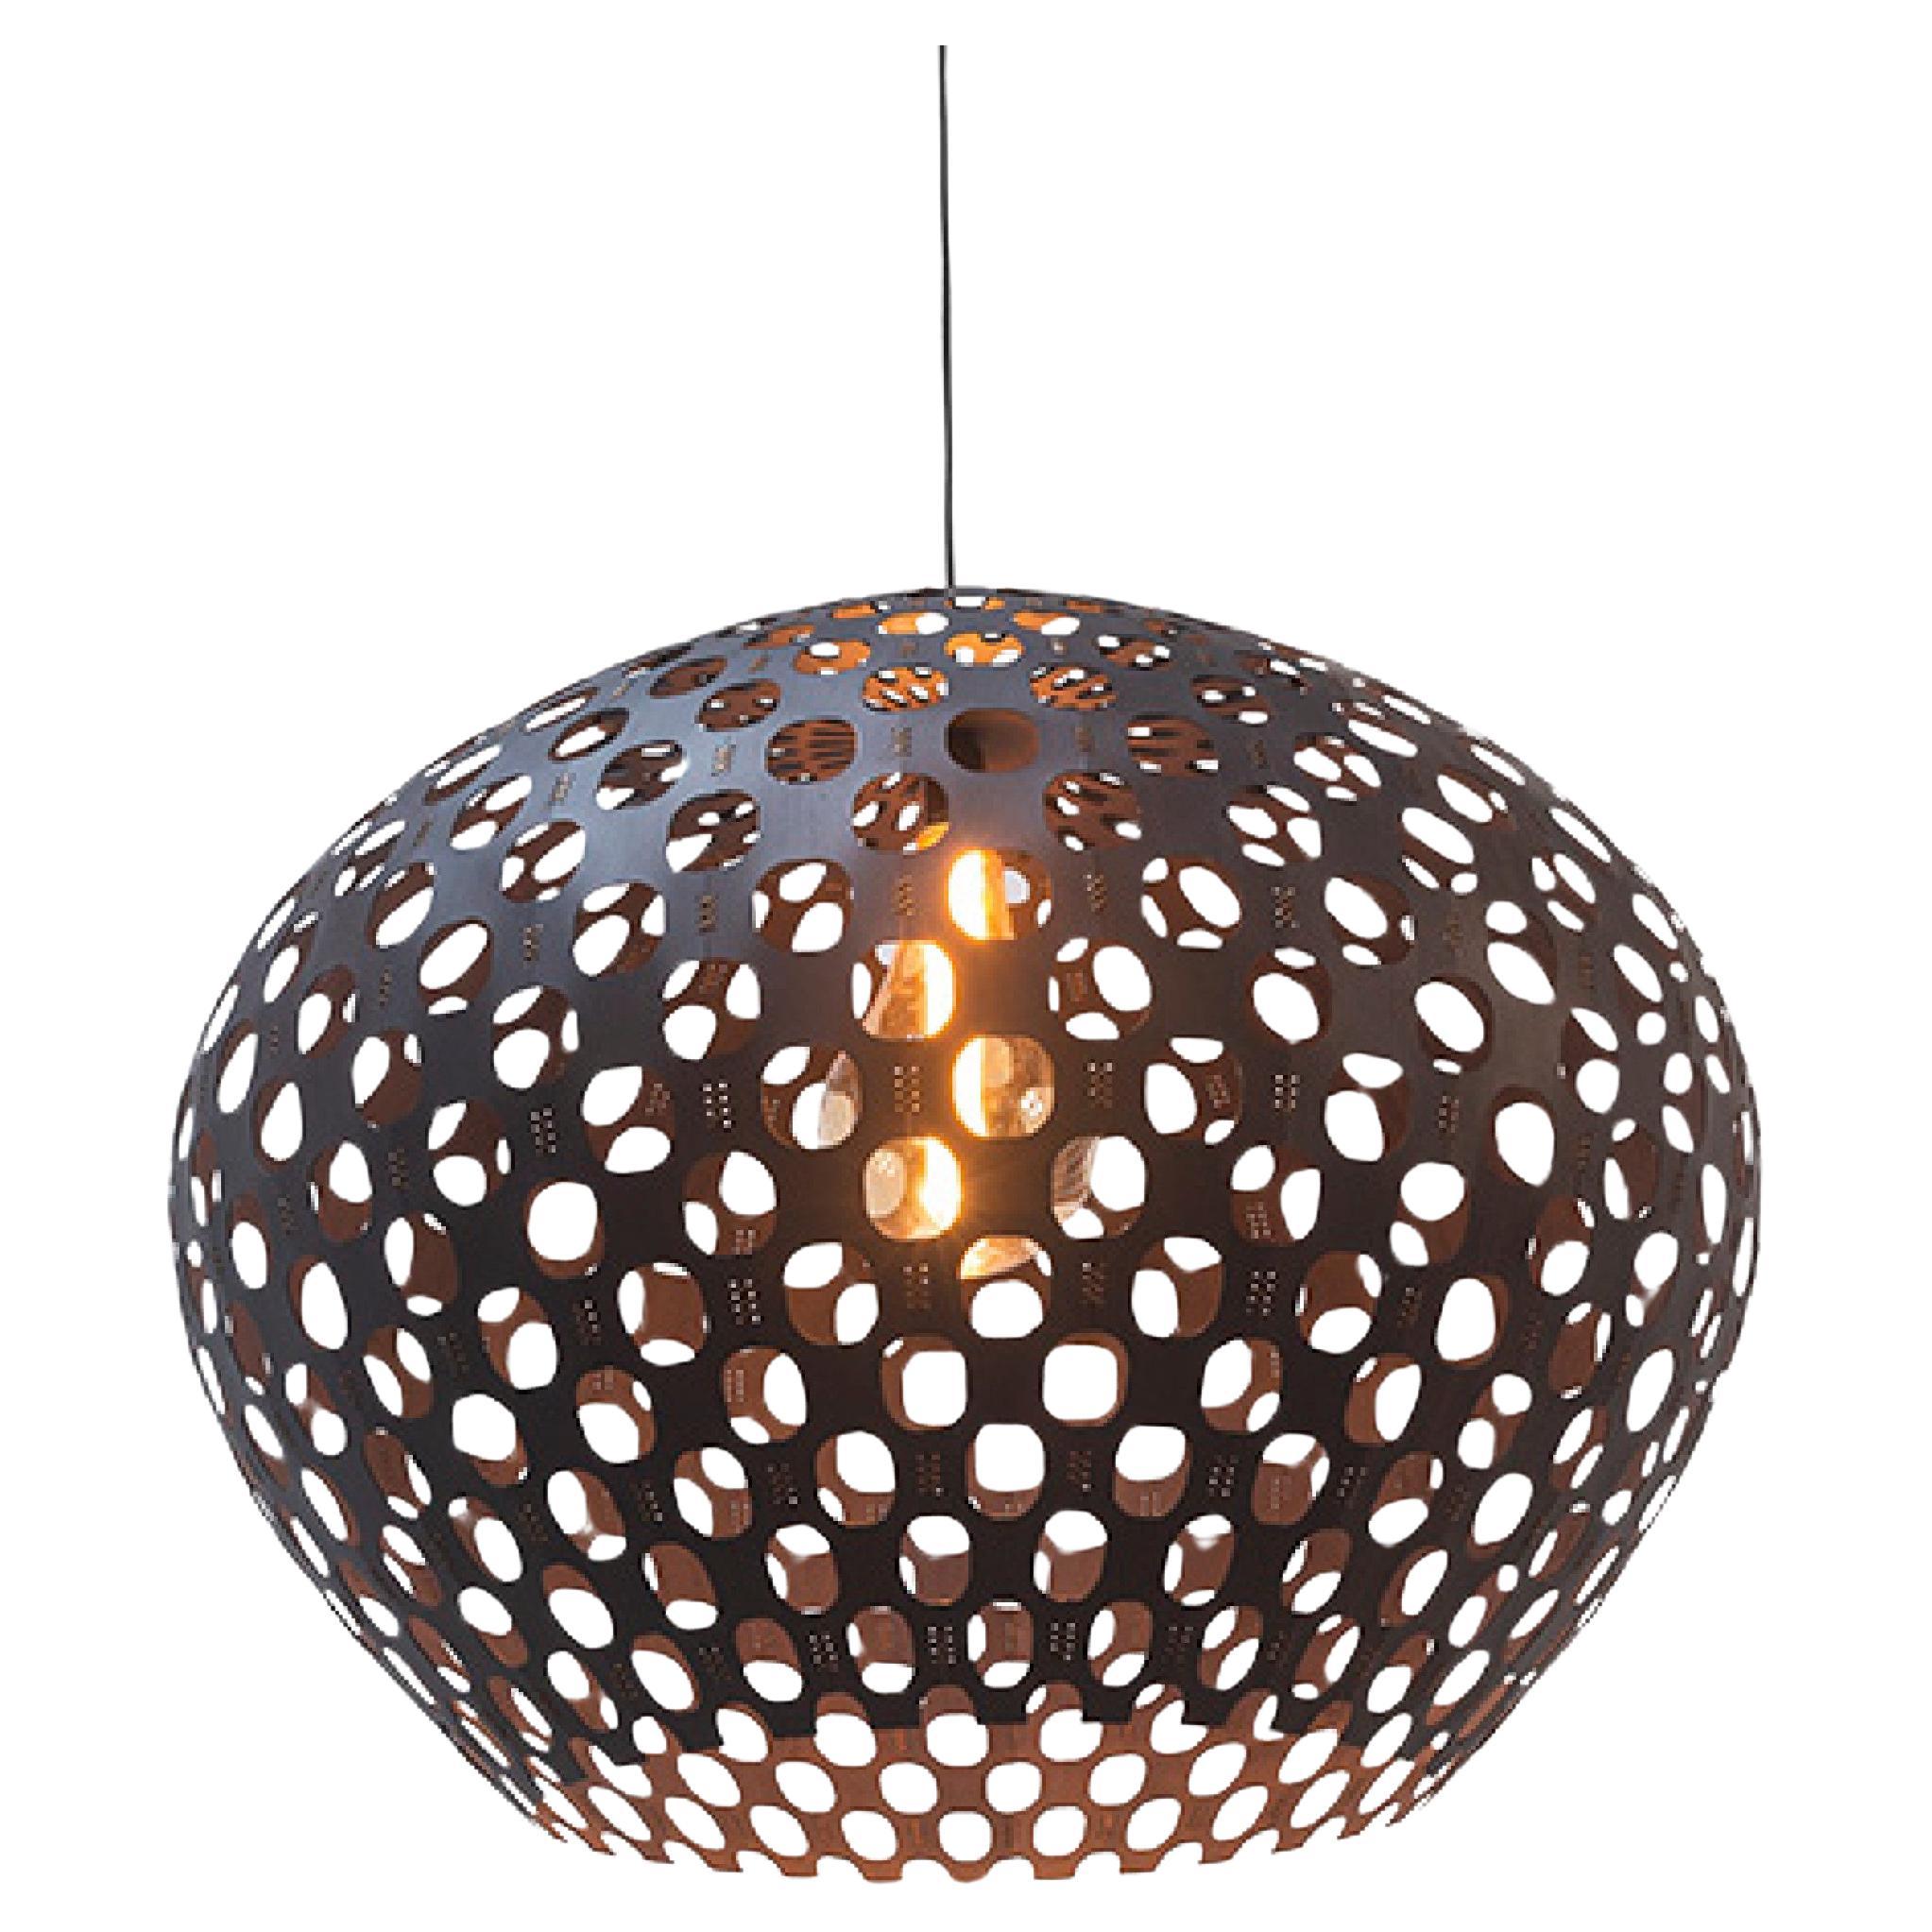 Panelitos Sphere Lamp Large by Piegatto, a Contemporary Sculptural Lamp en vente